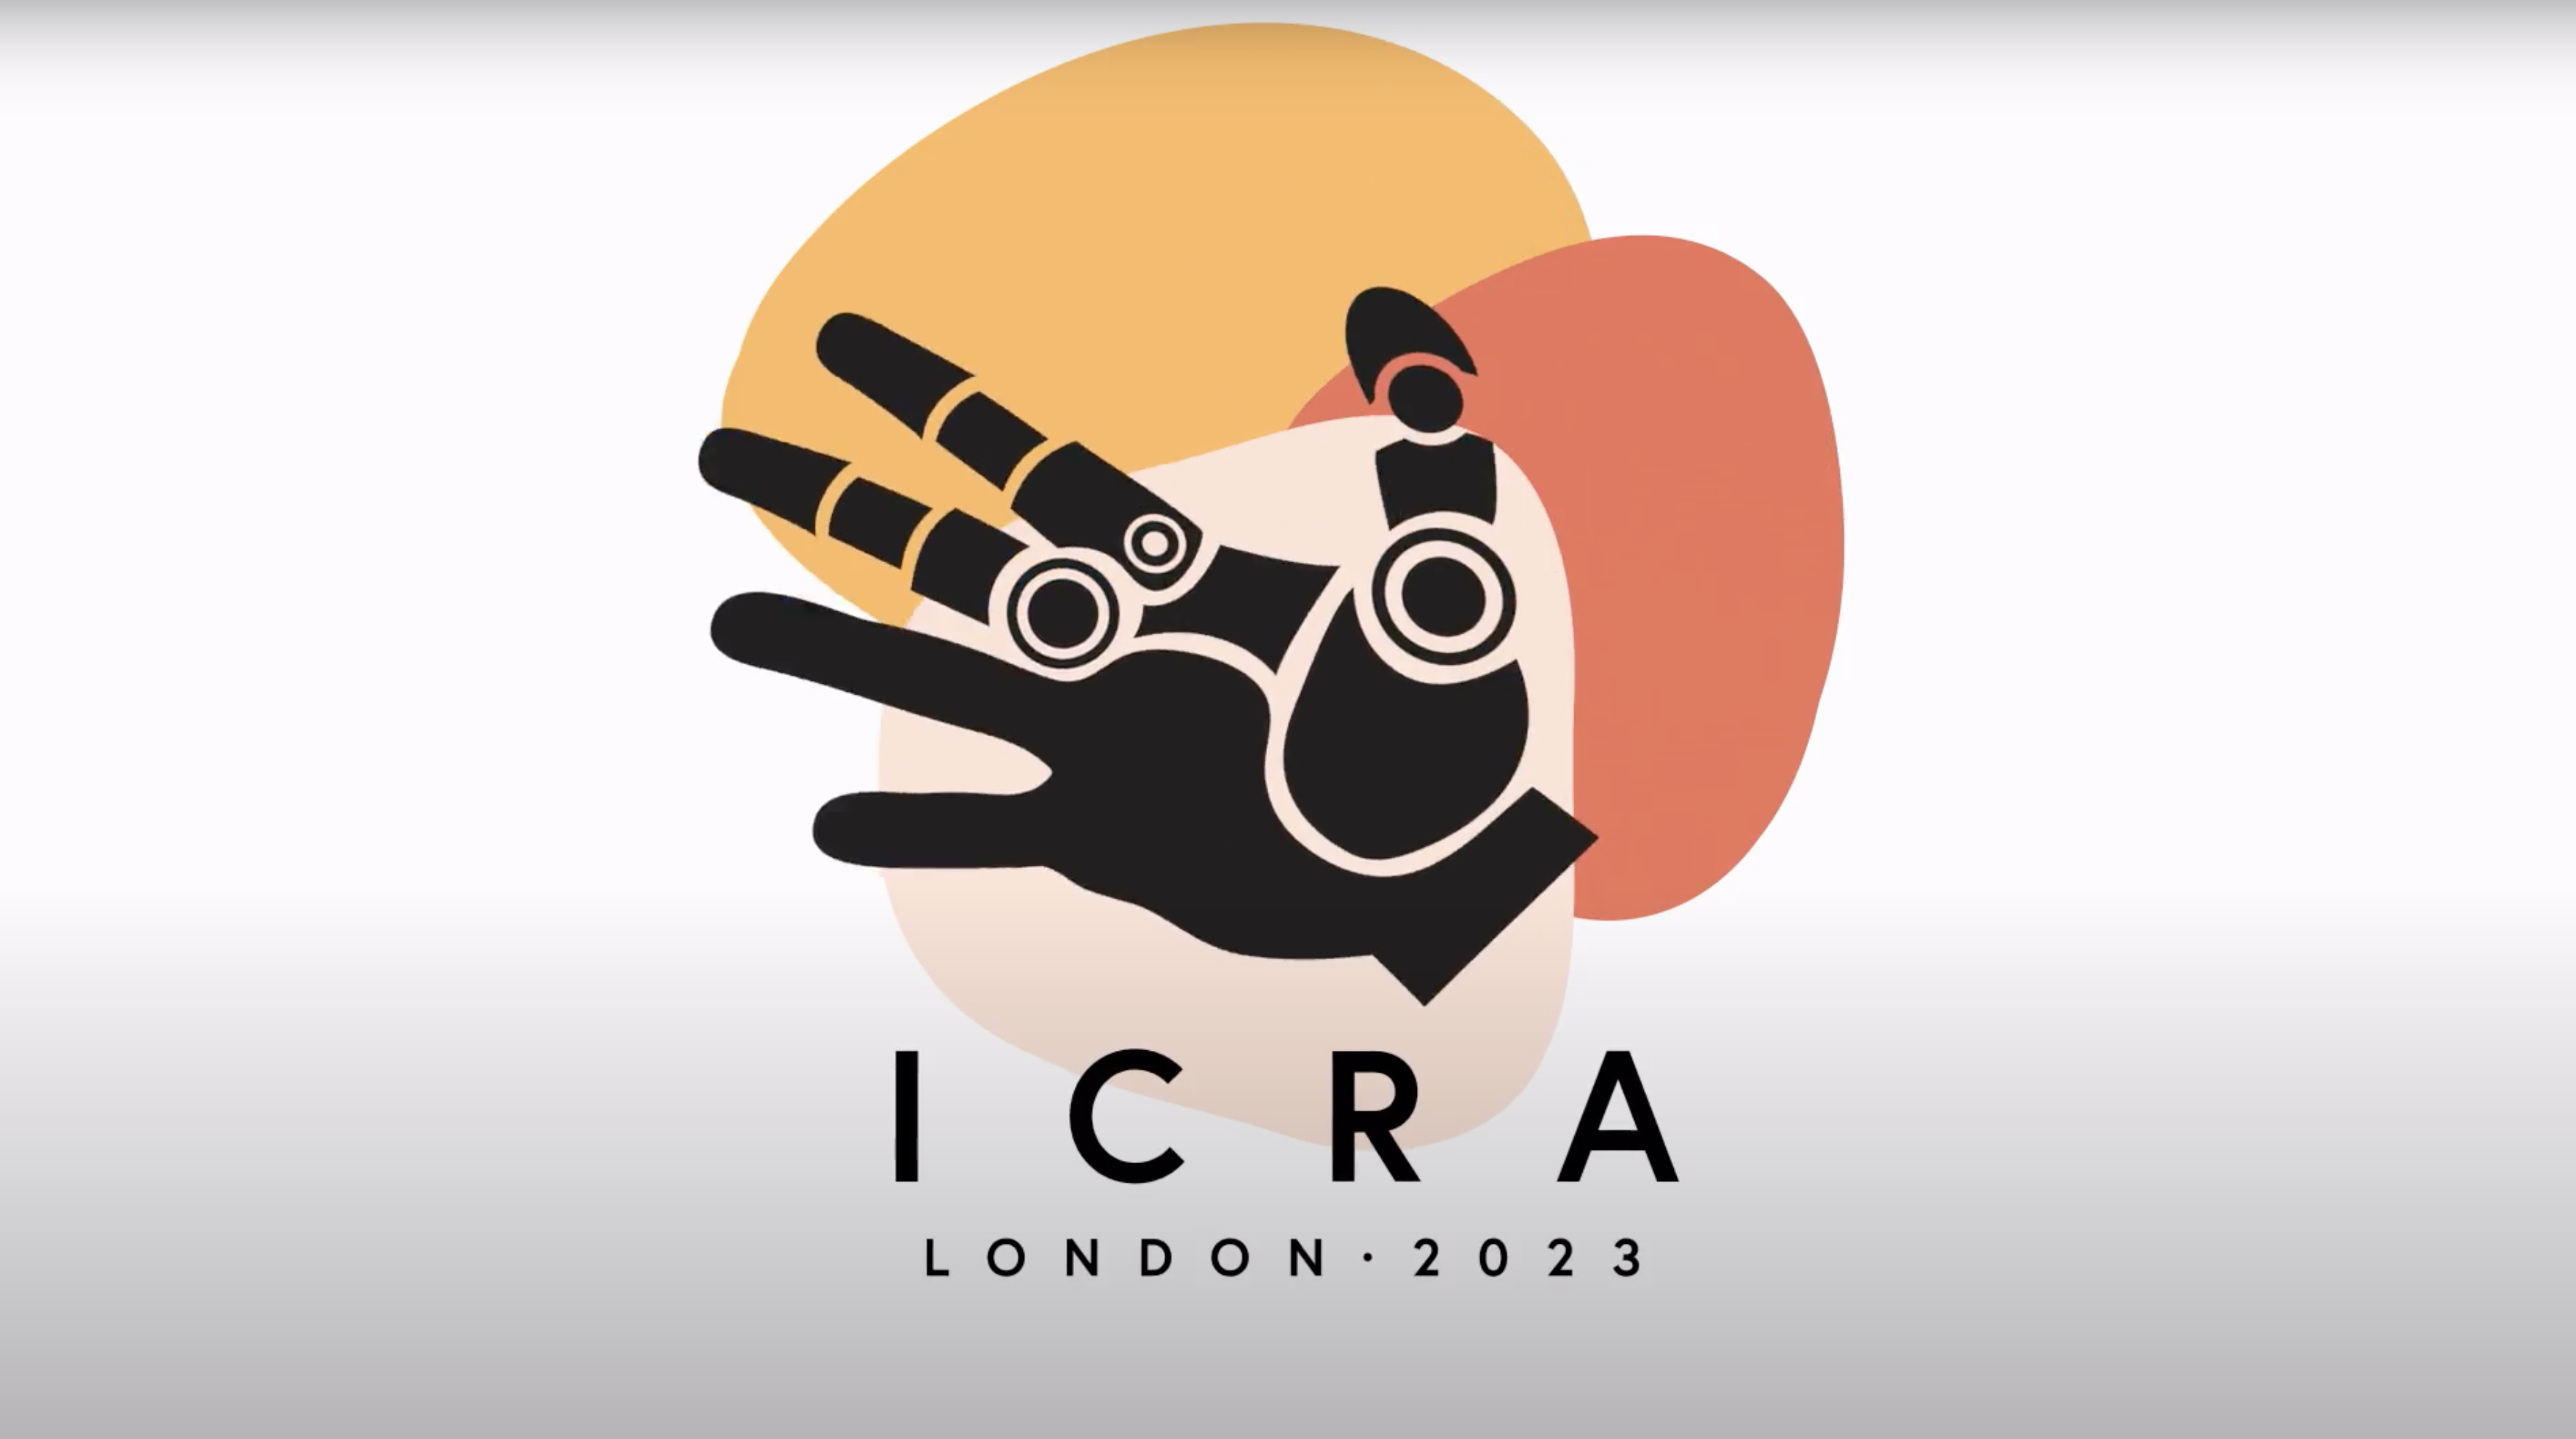 ICRA 2023 promotion